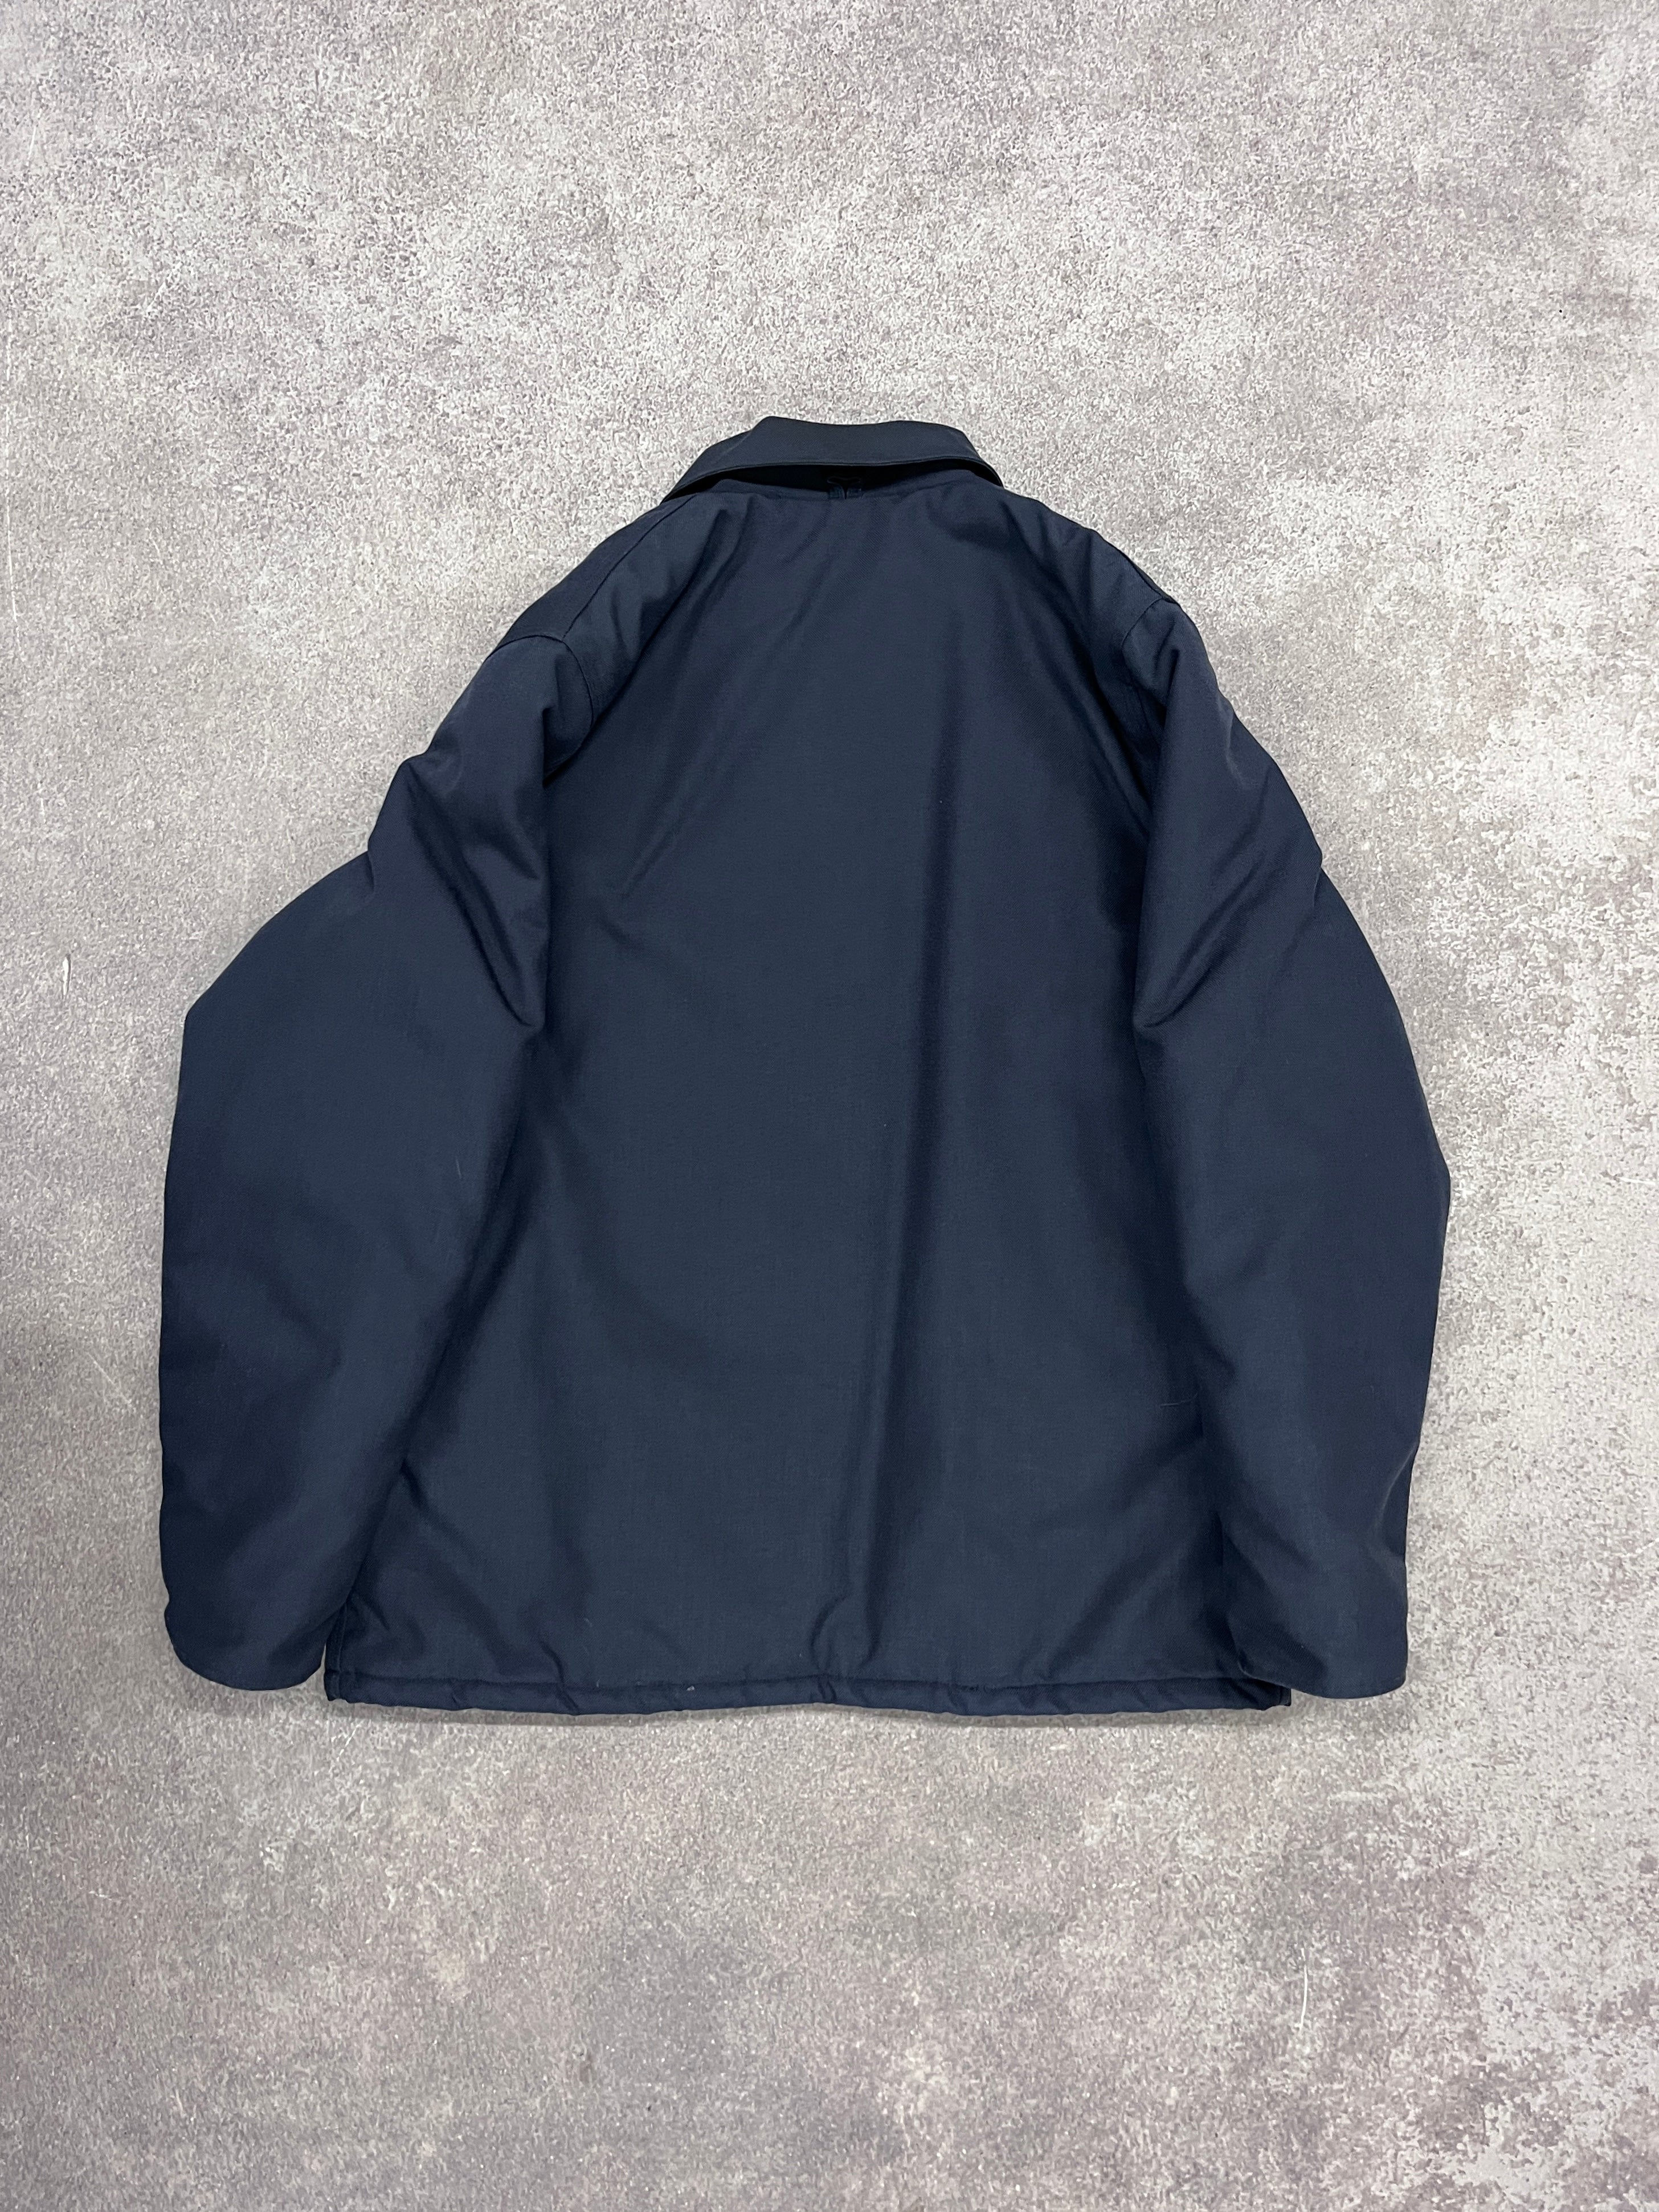 Vintage Carhartt Jacket Blue // X-Large - RHAGHOUSE VINTAGE